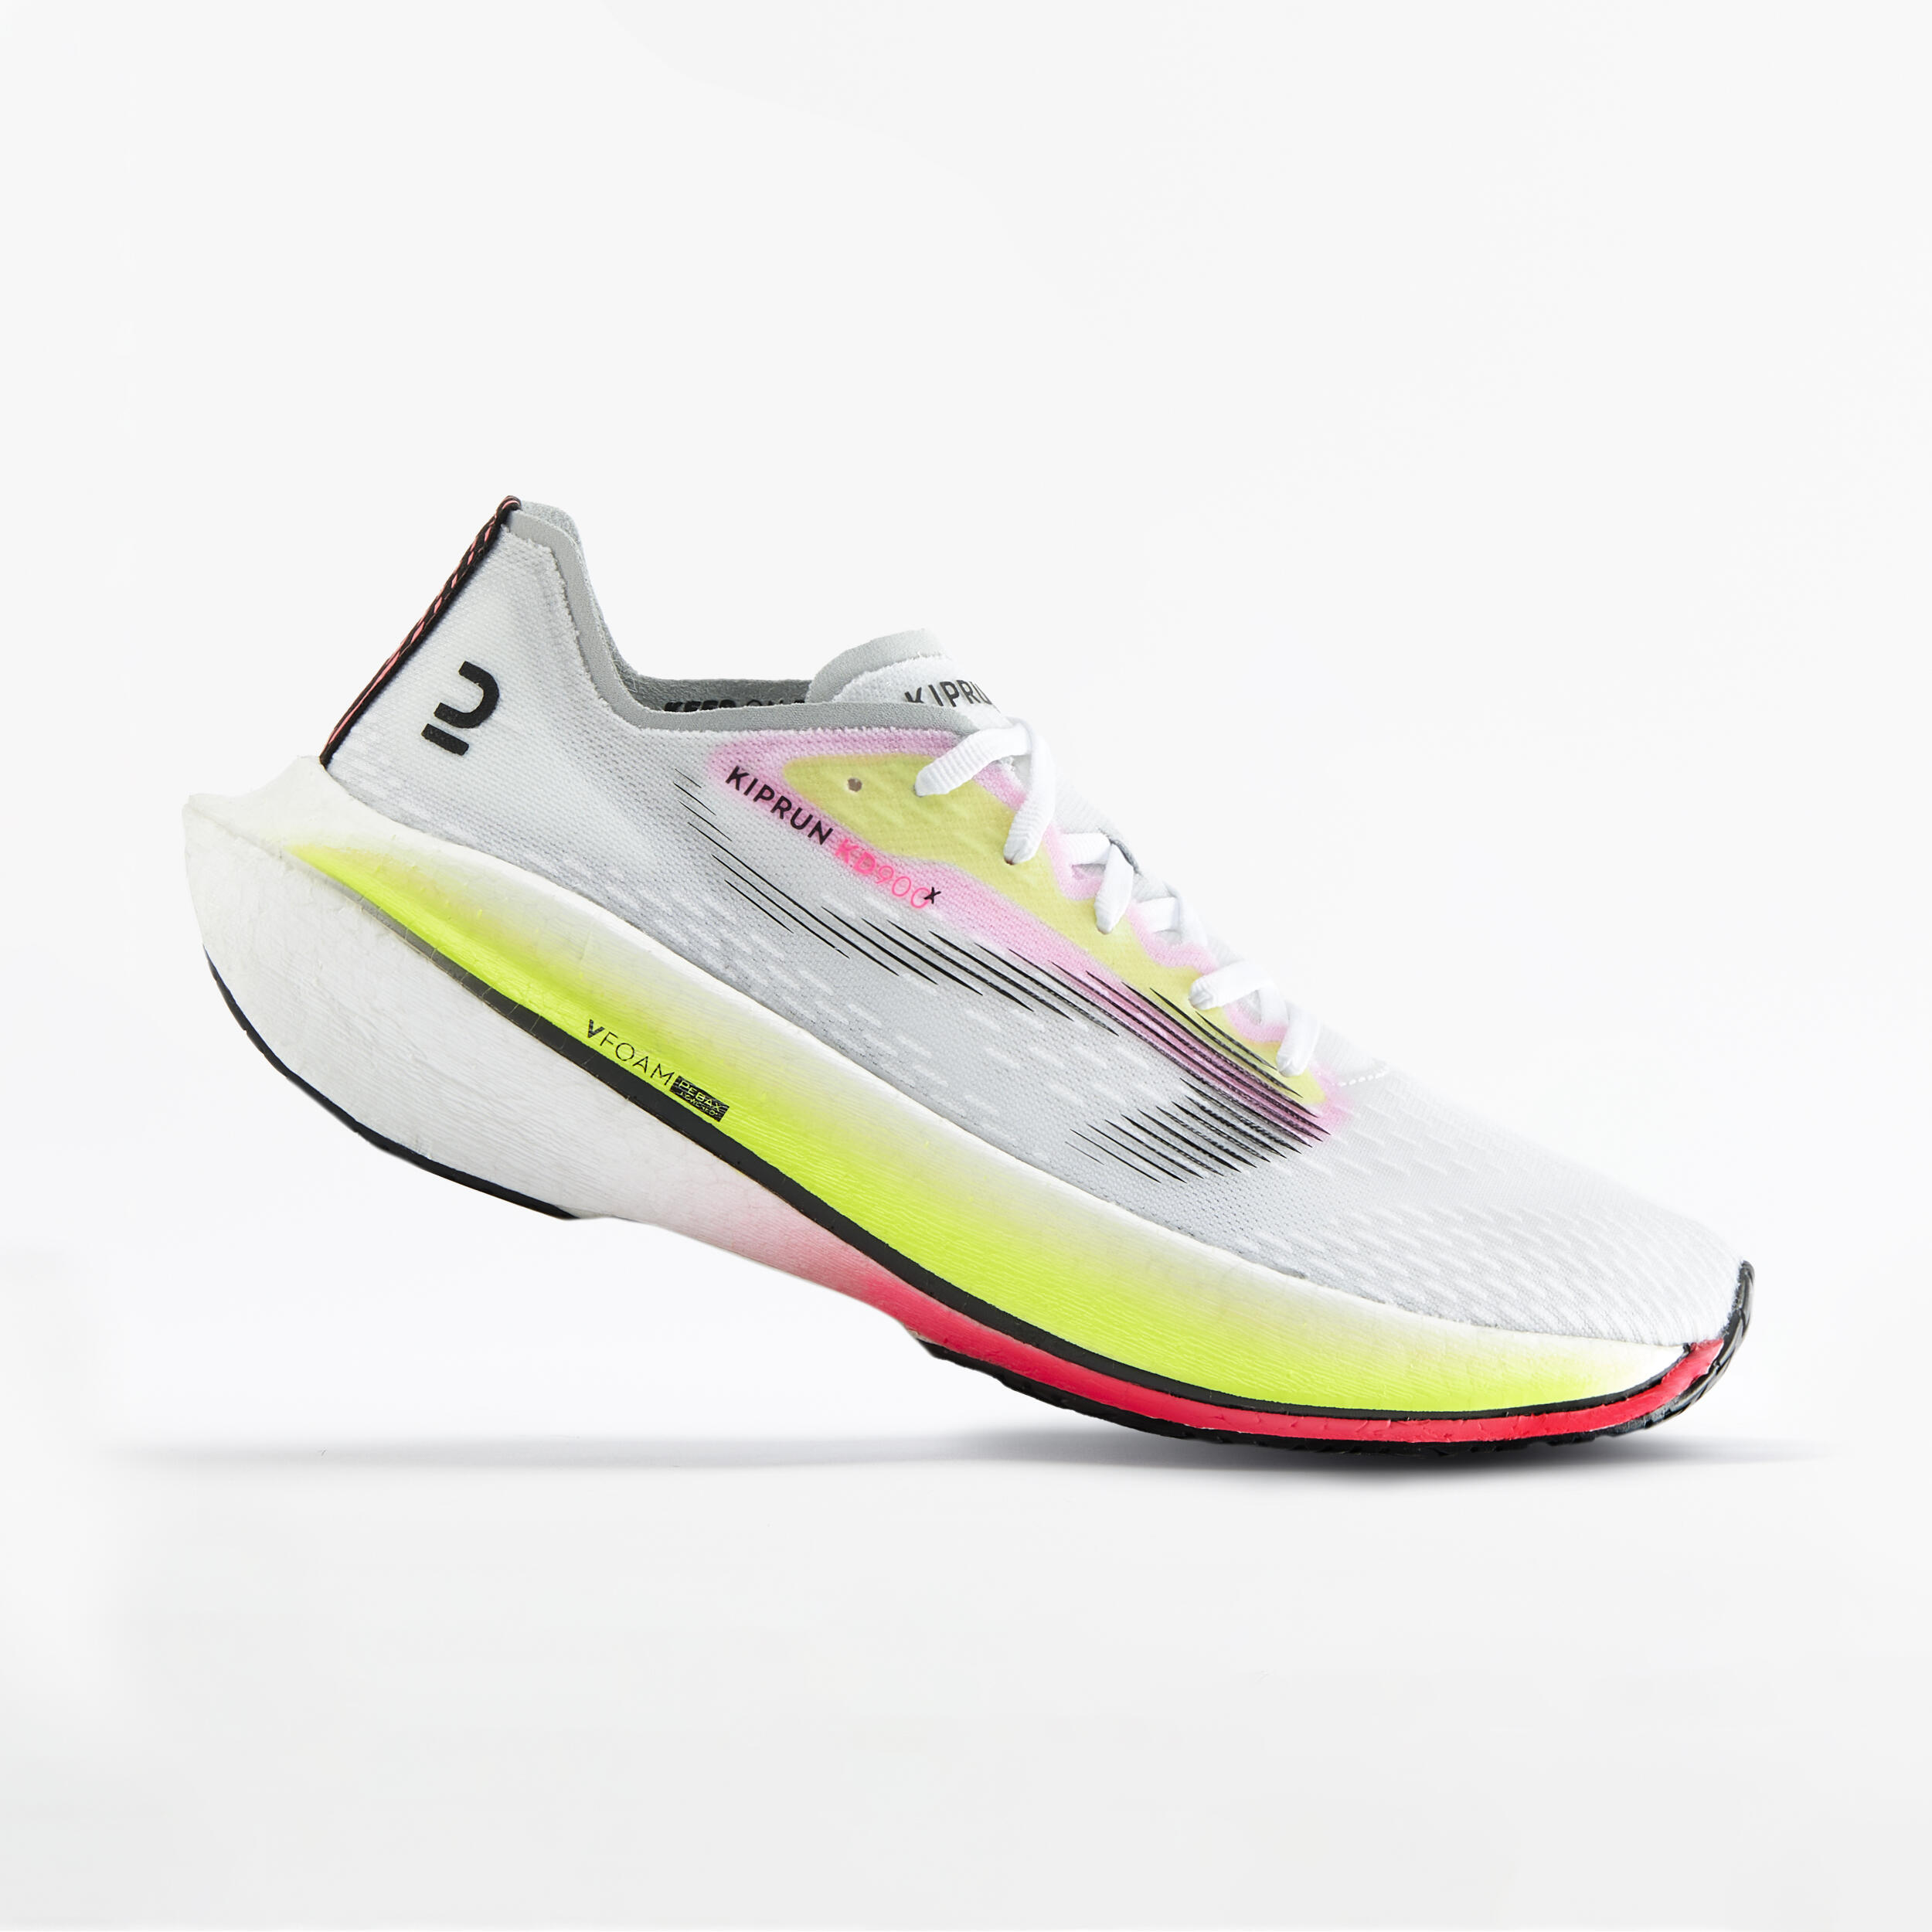 Decathlon Shoes: The best Kalenji and Kiprun running shoes